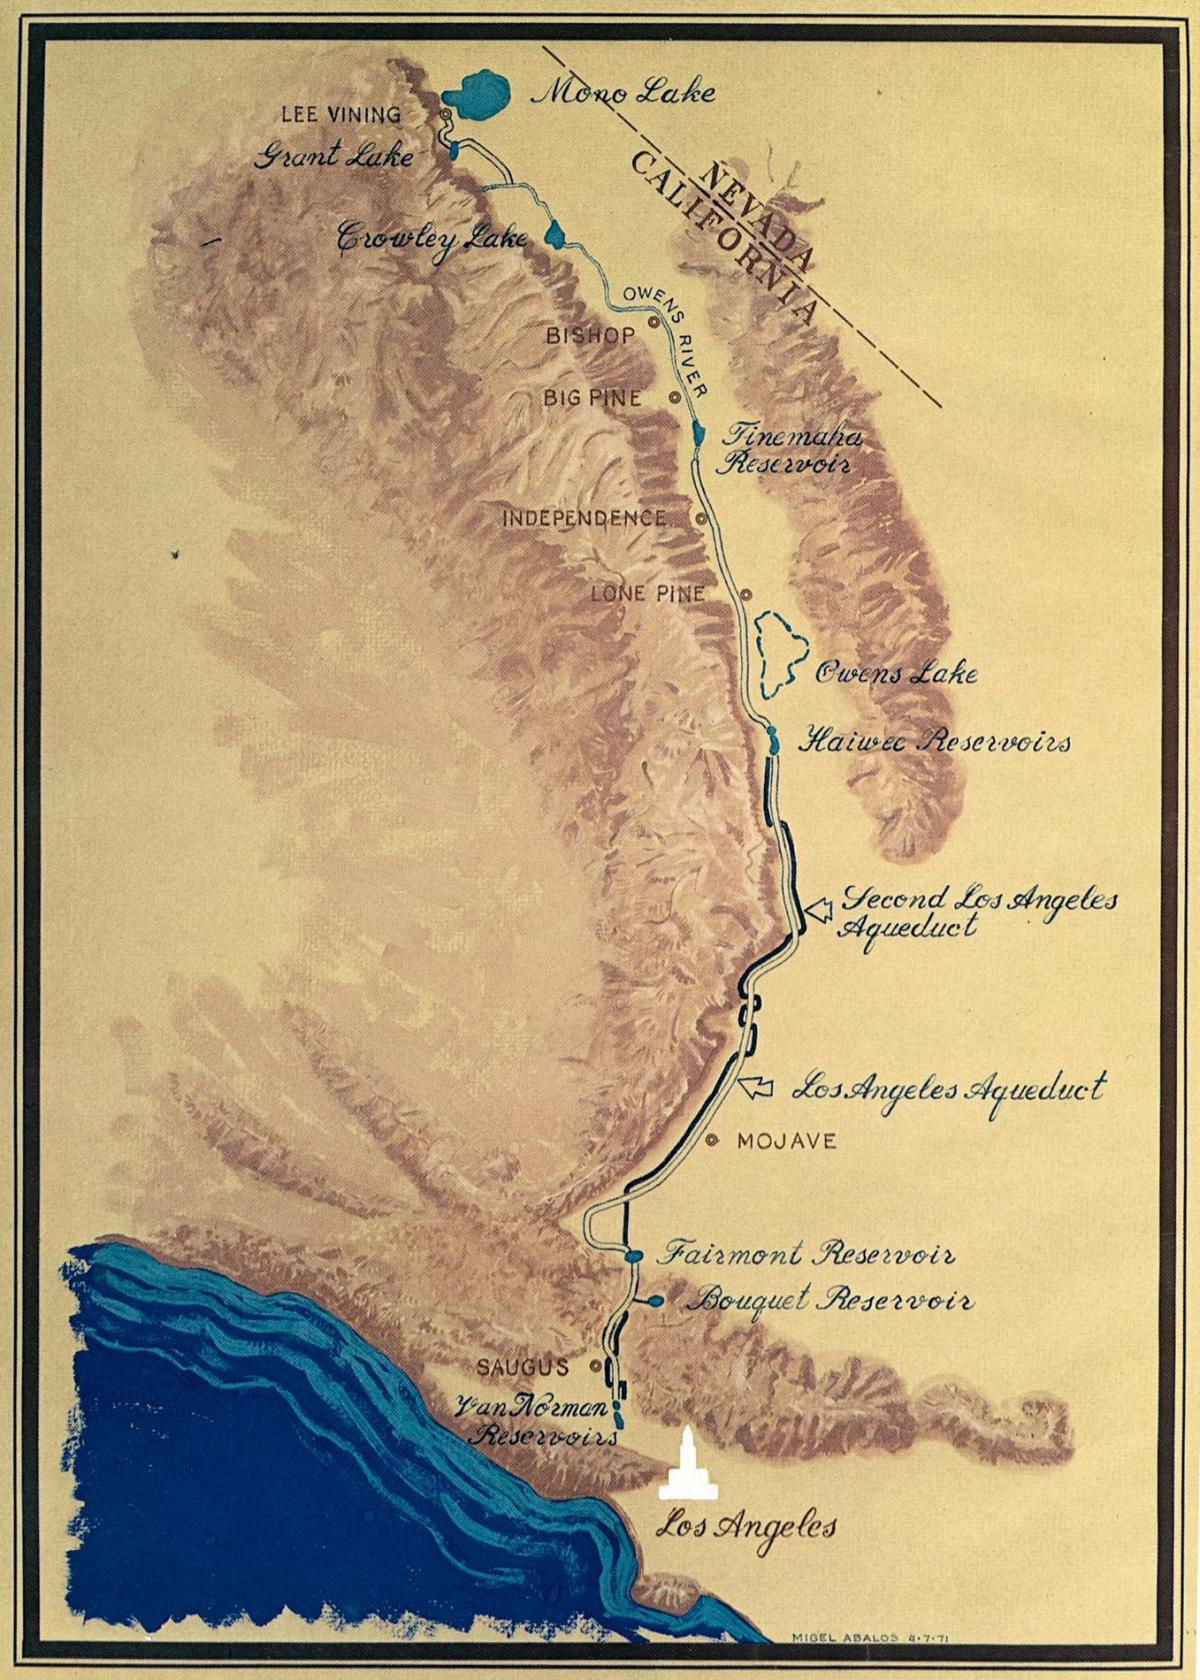 mapa Los Angeles akvadukt